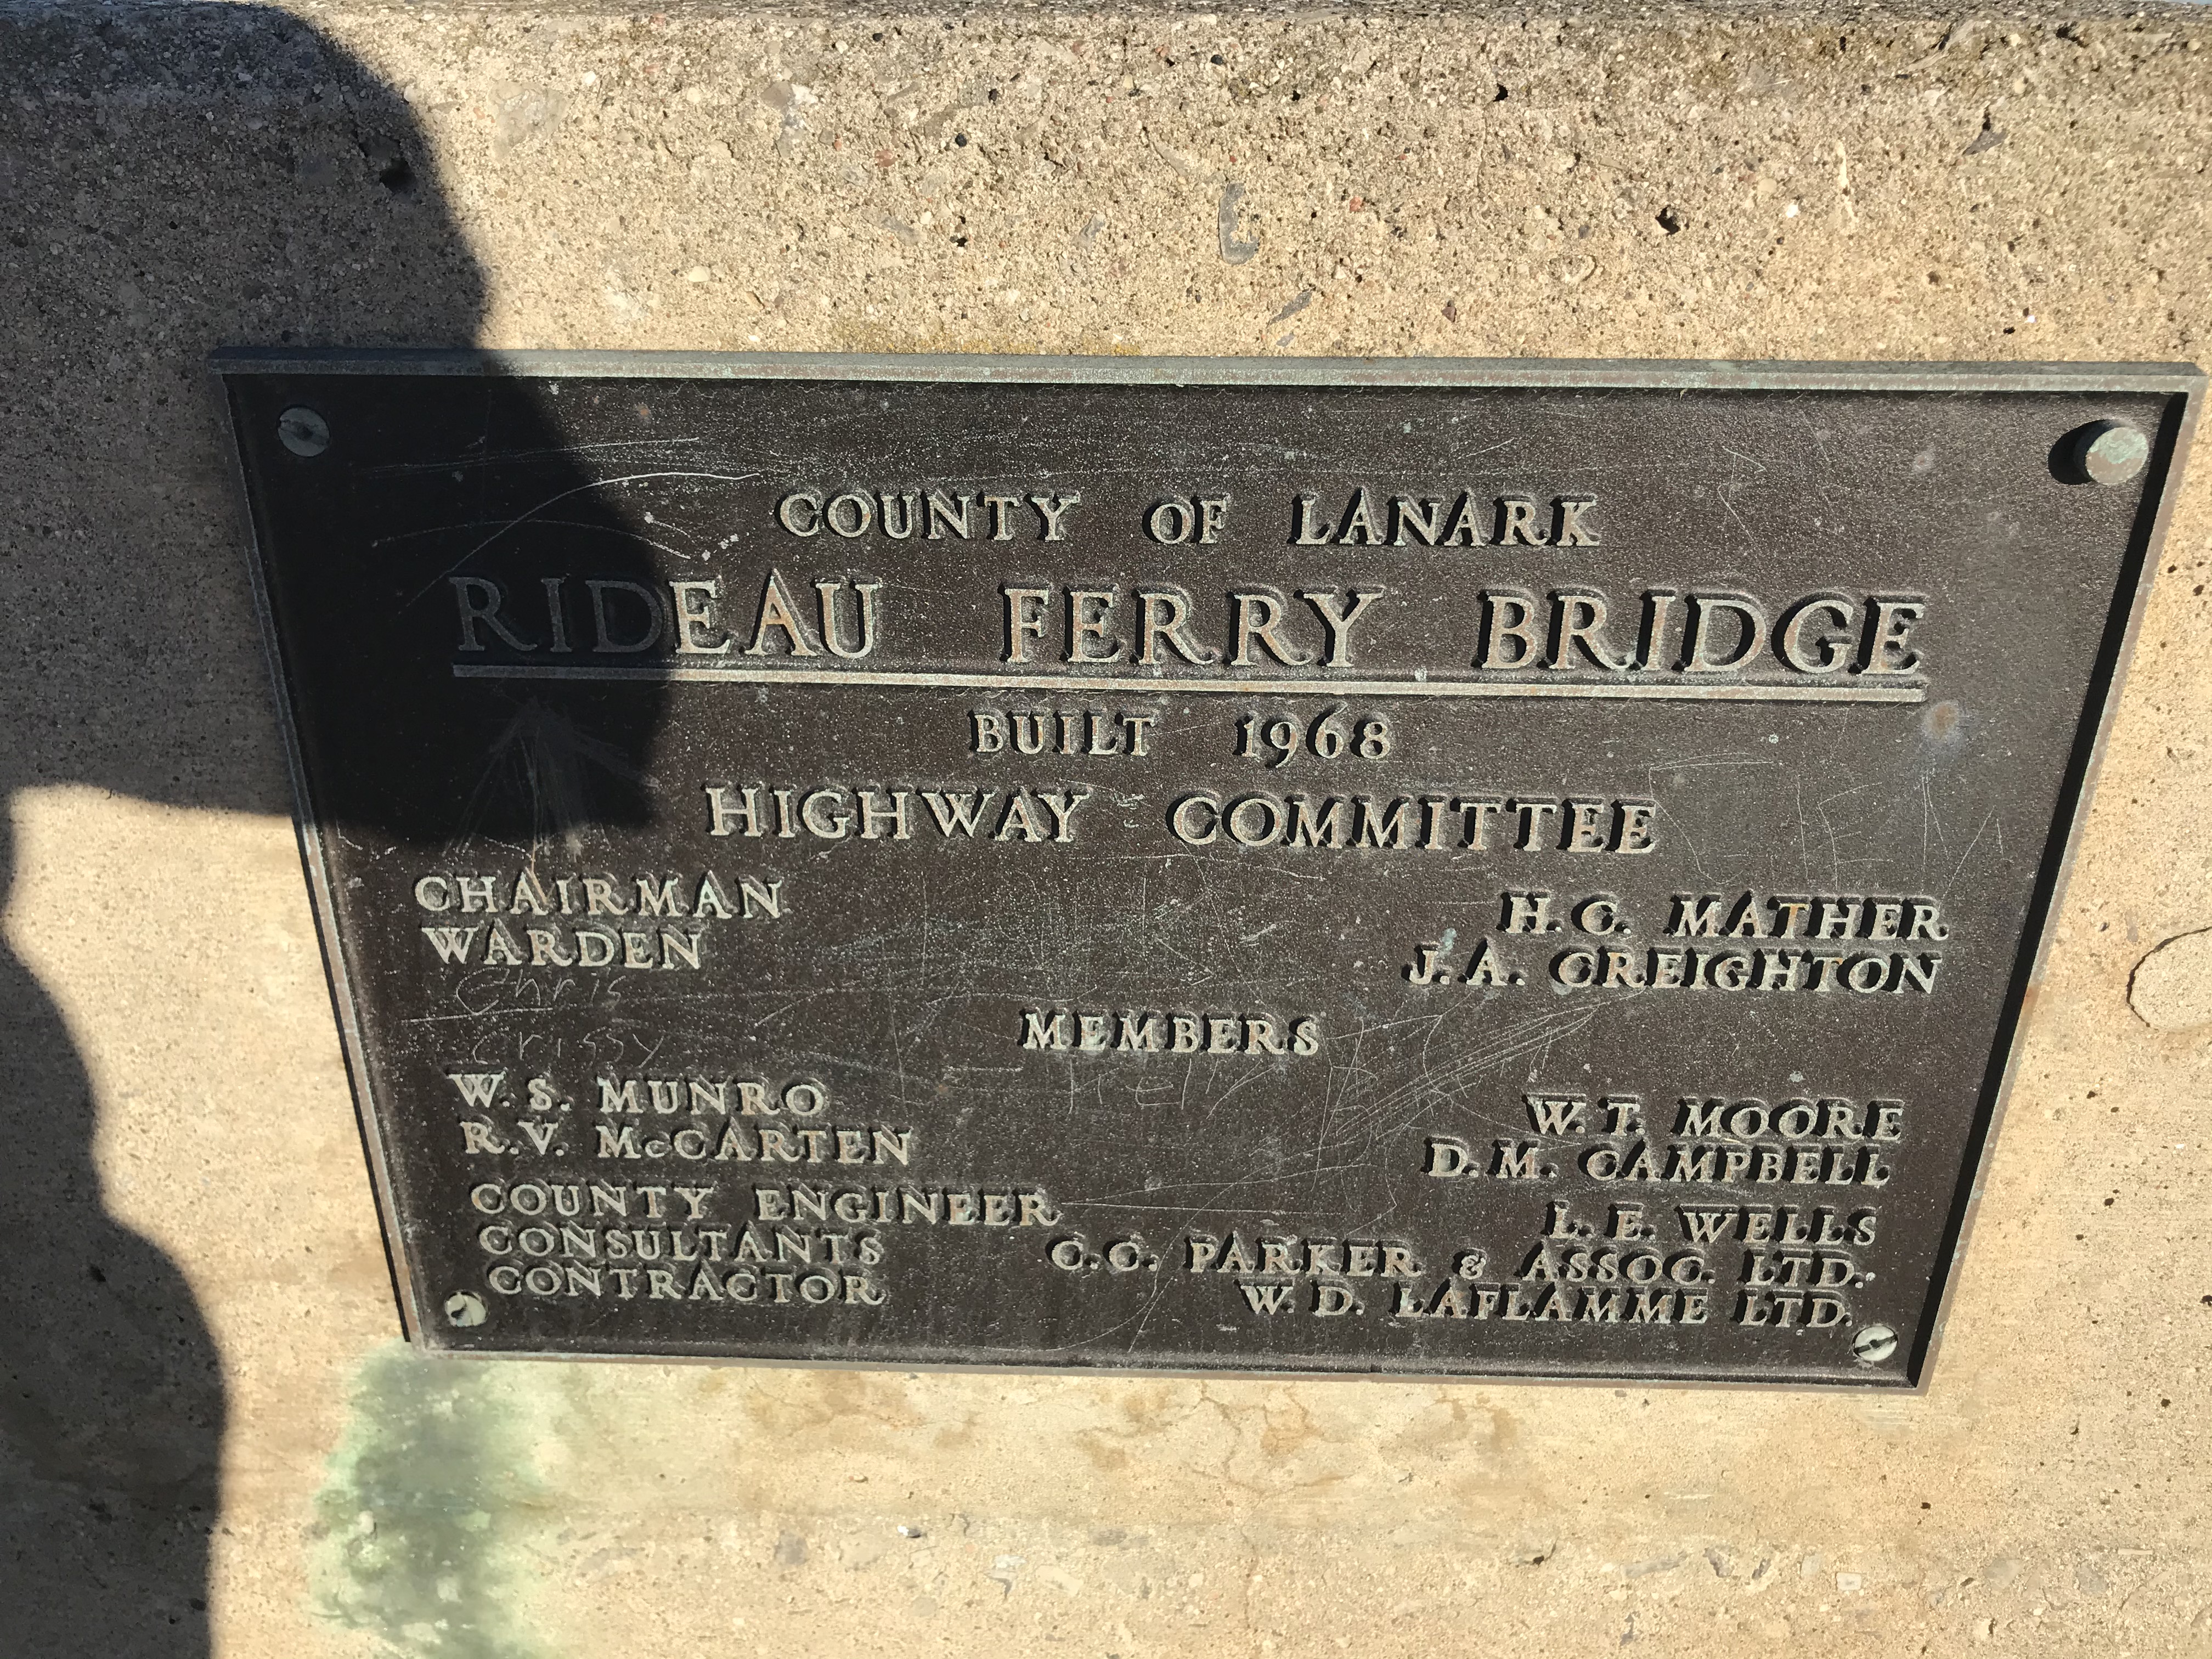 Rideau Ferry Bridge Name Plate